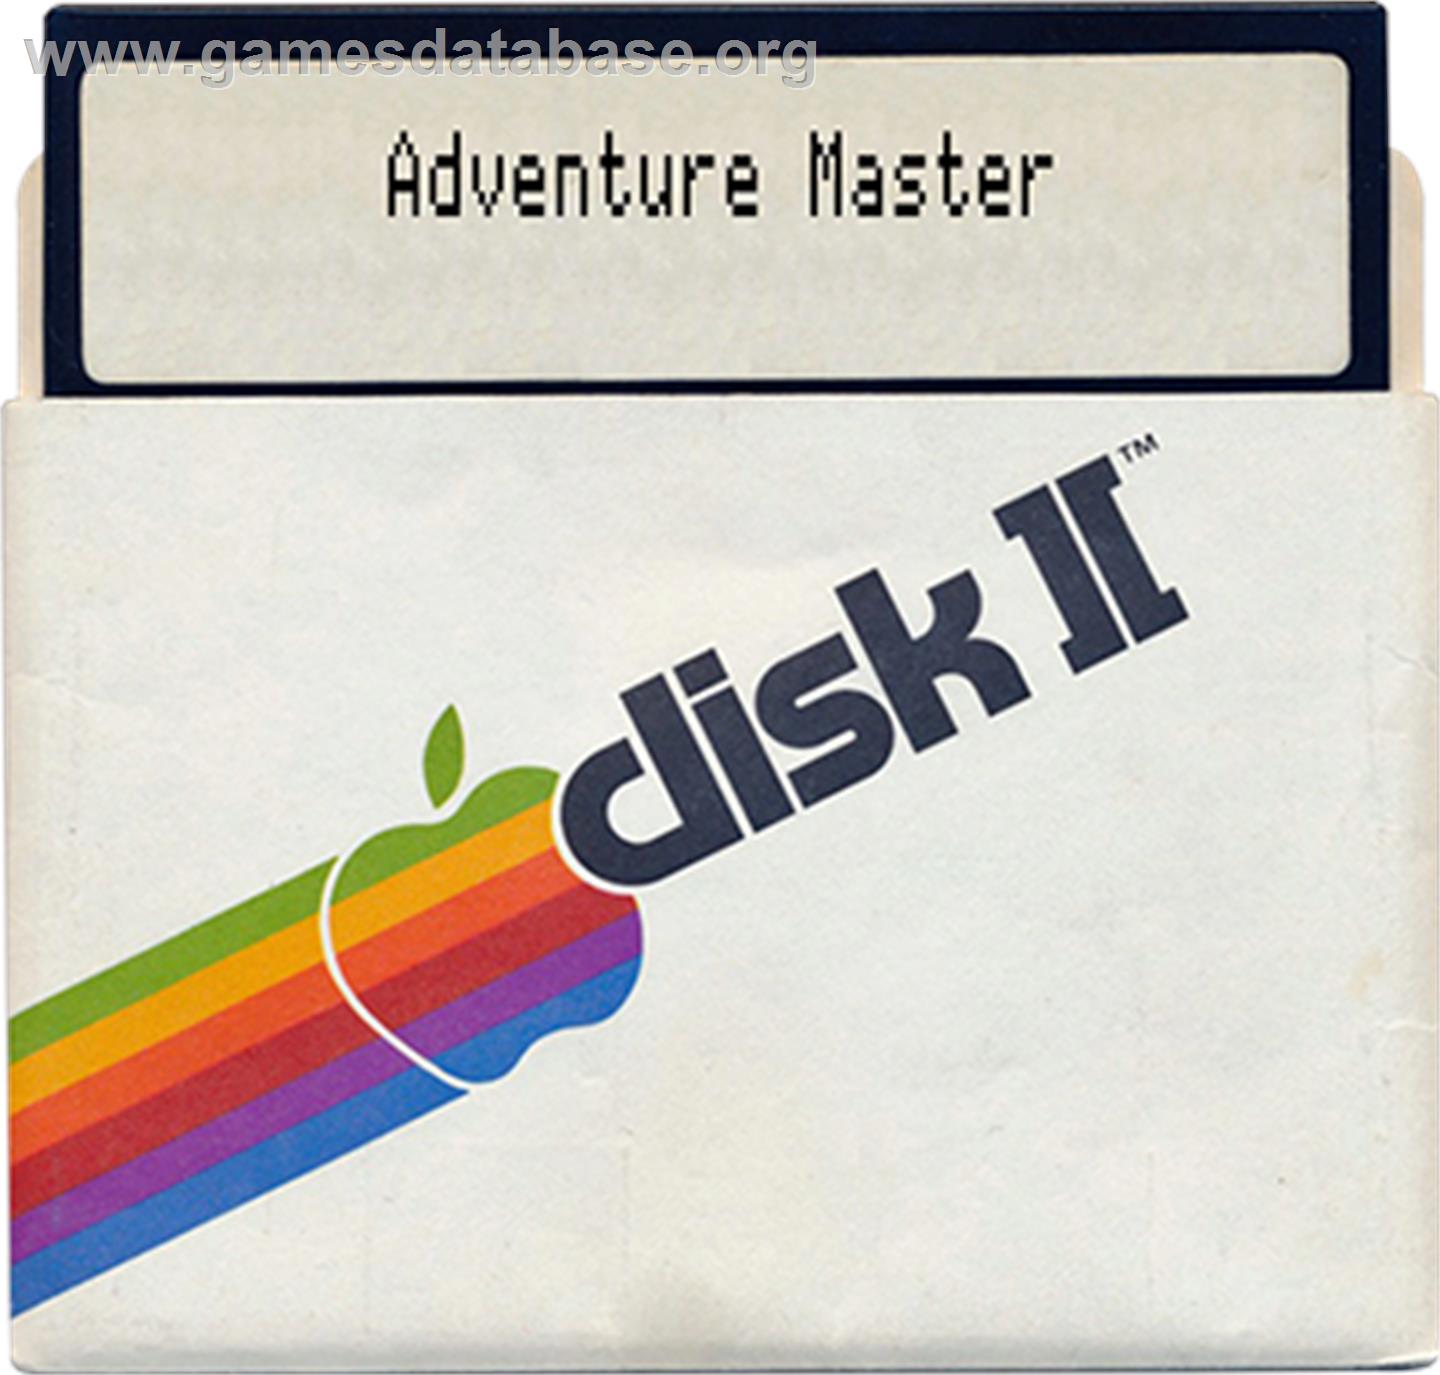 Adventure Master - Apple II - Artwork - Disc